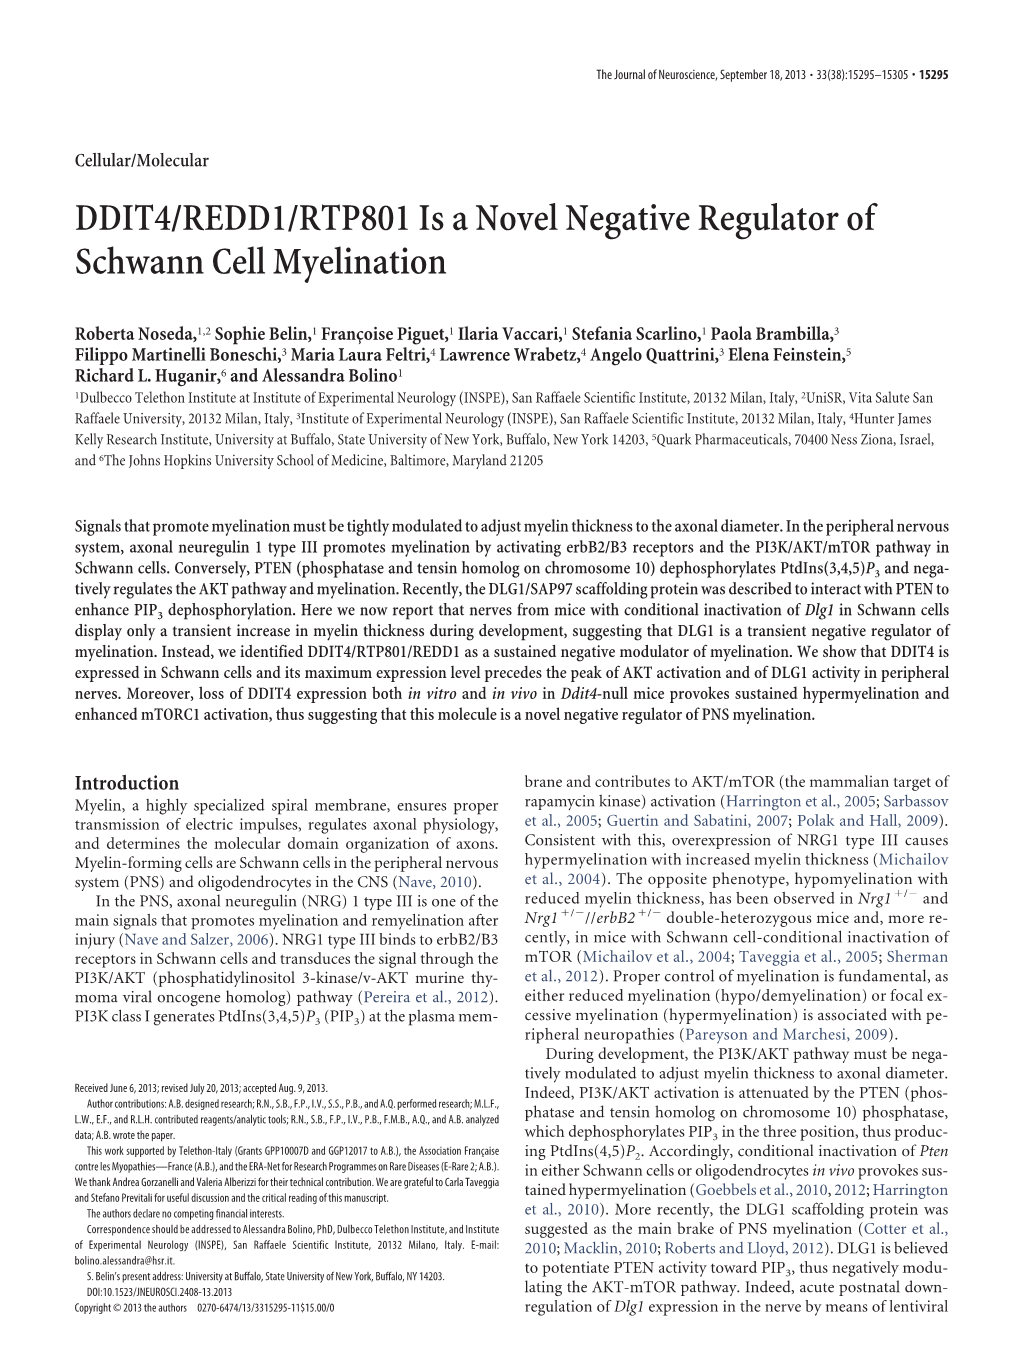 DDIT4/REDD1/RTP801 Is a Novel Negative Regulator of Schwann Cell Myelination